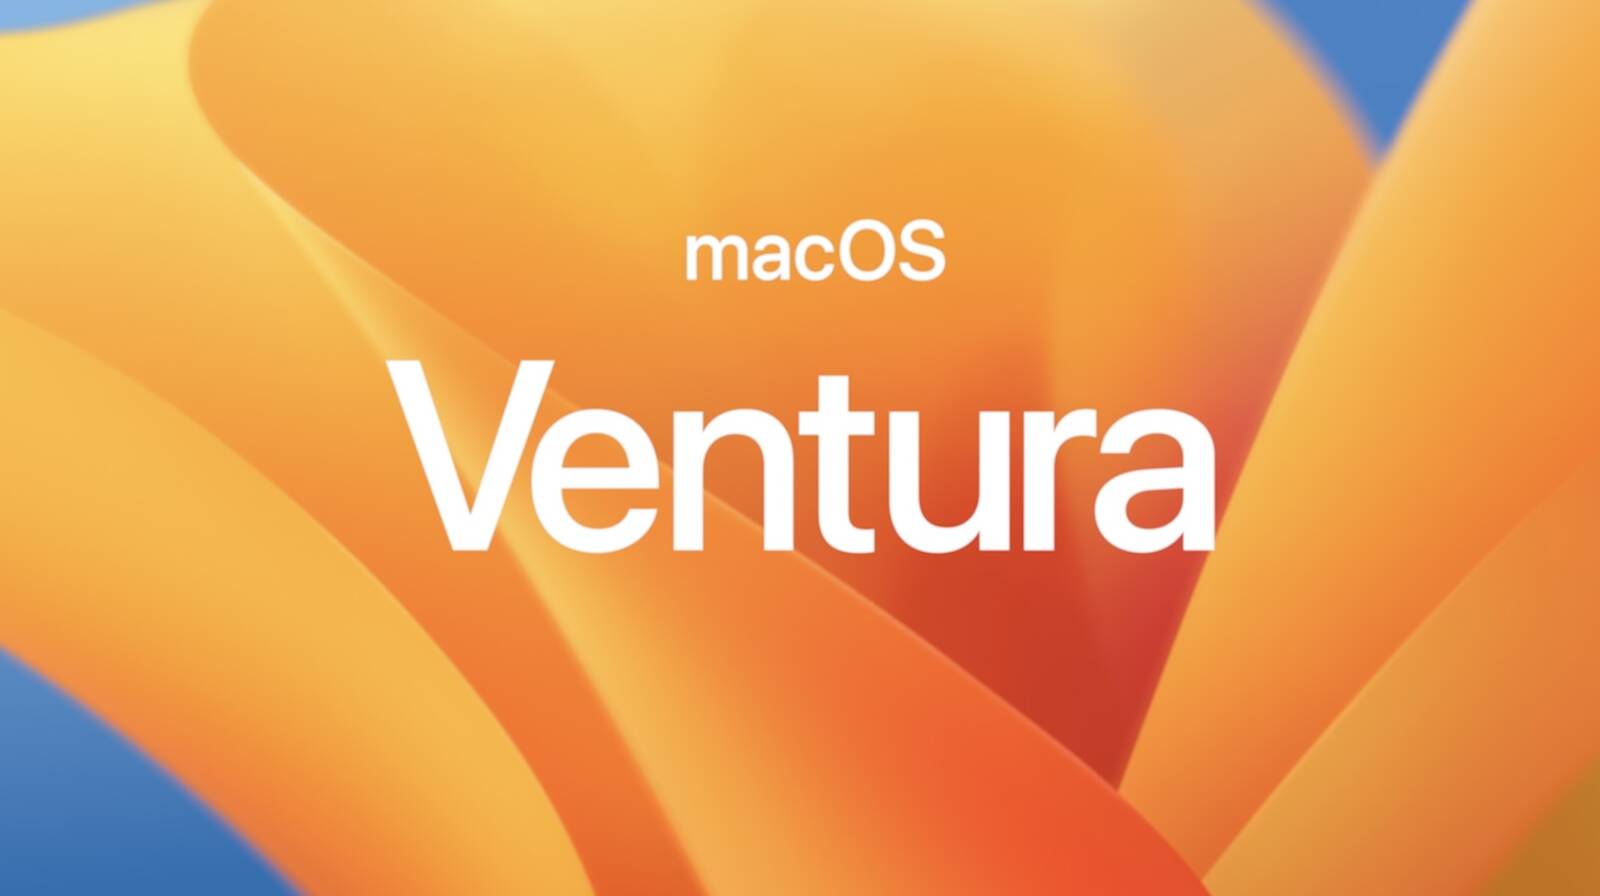 ｢macOS Ventura 13.2.1｣ではパイオニア製Blu-rayドライブが認識されなくなる不具合が修正された模様